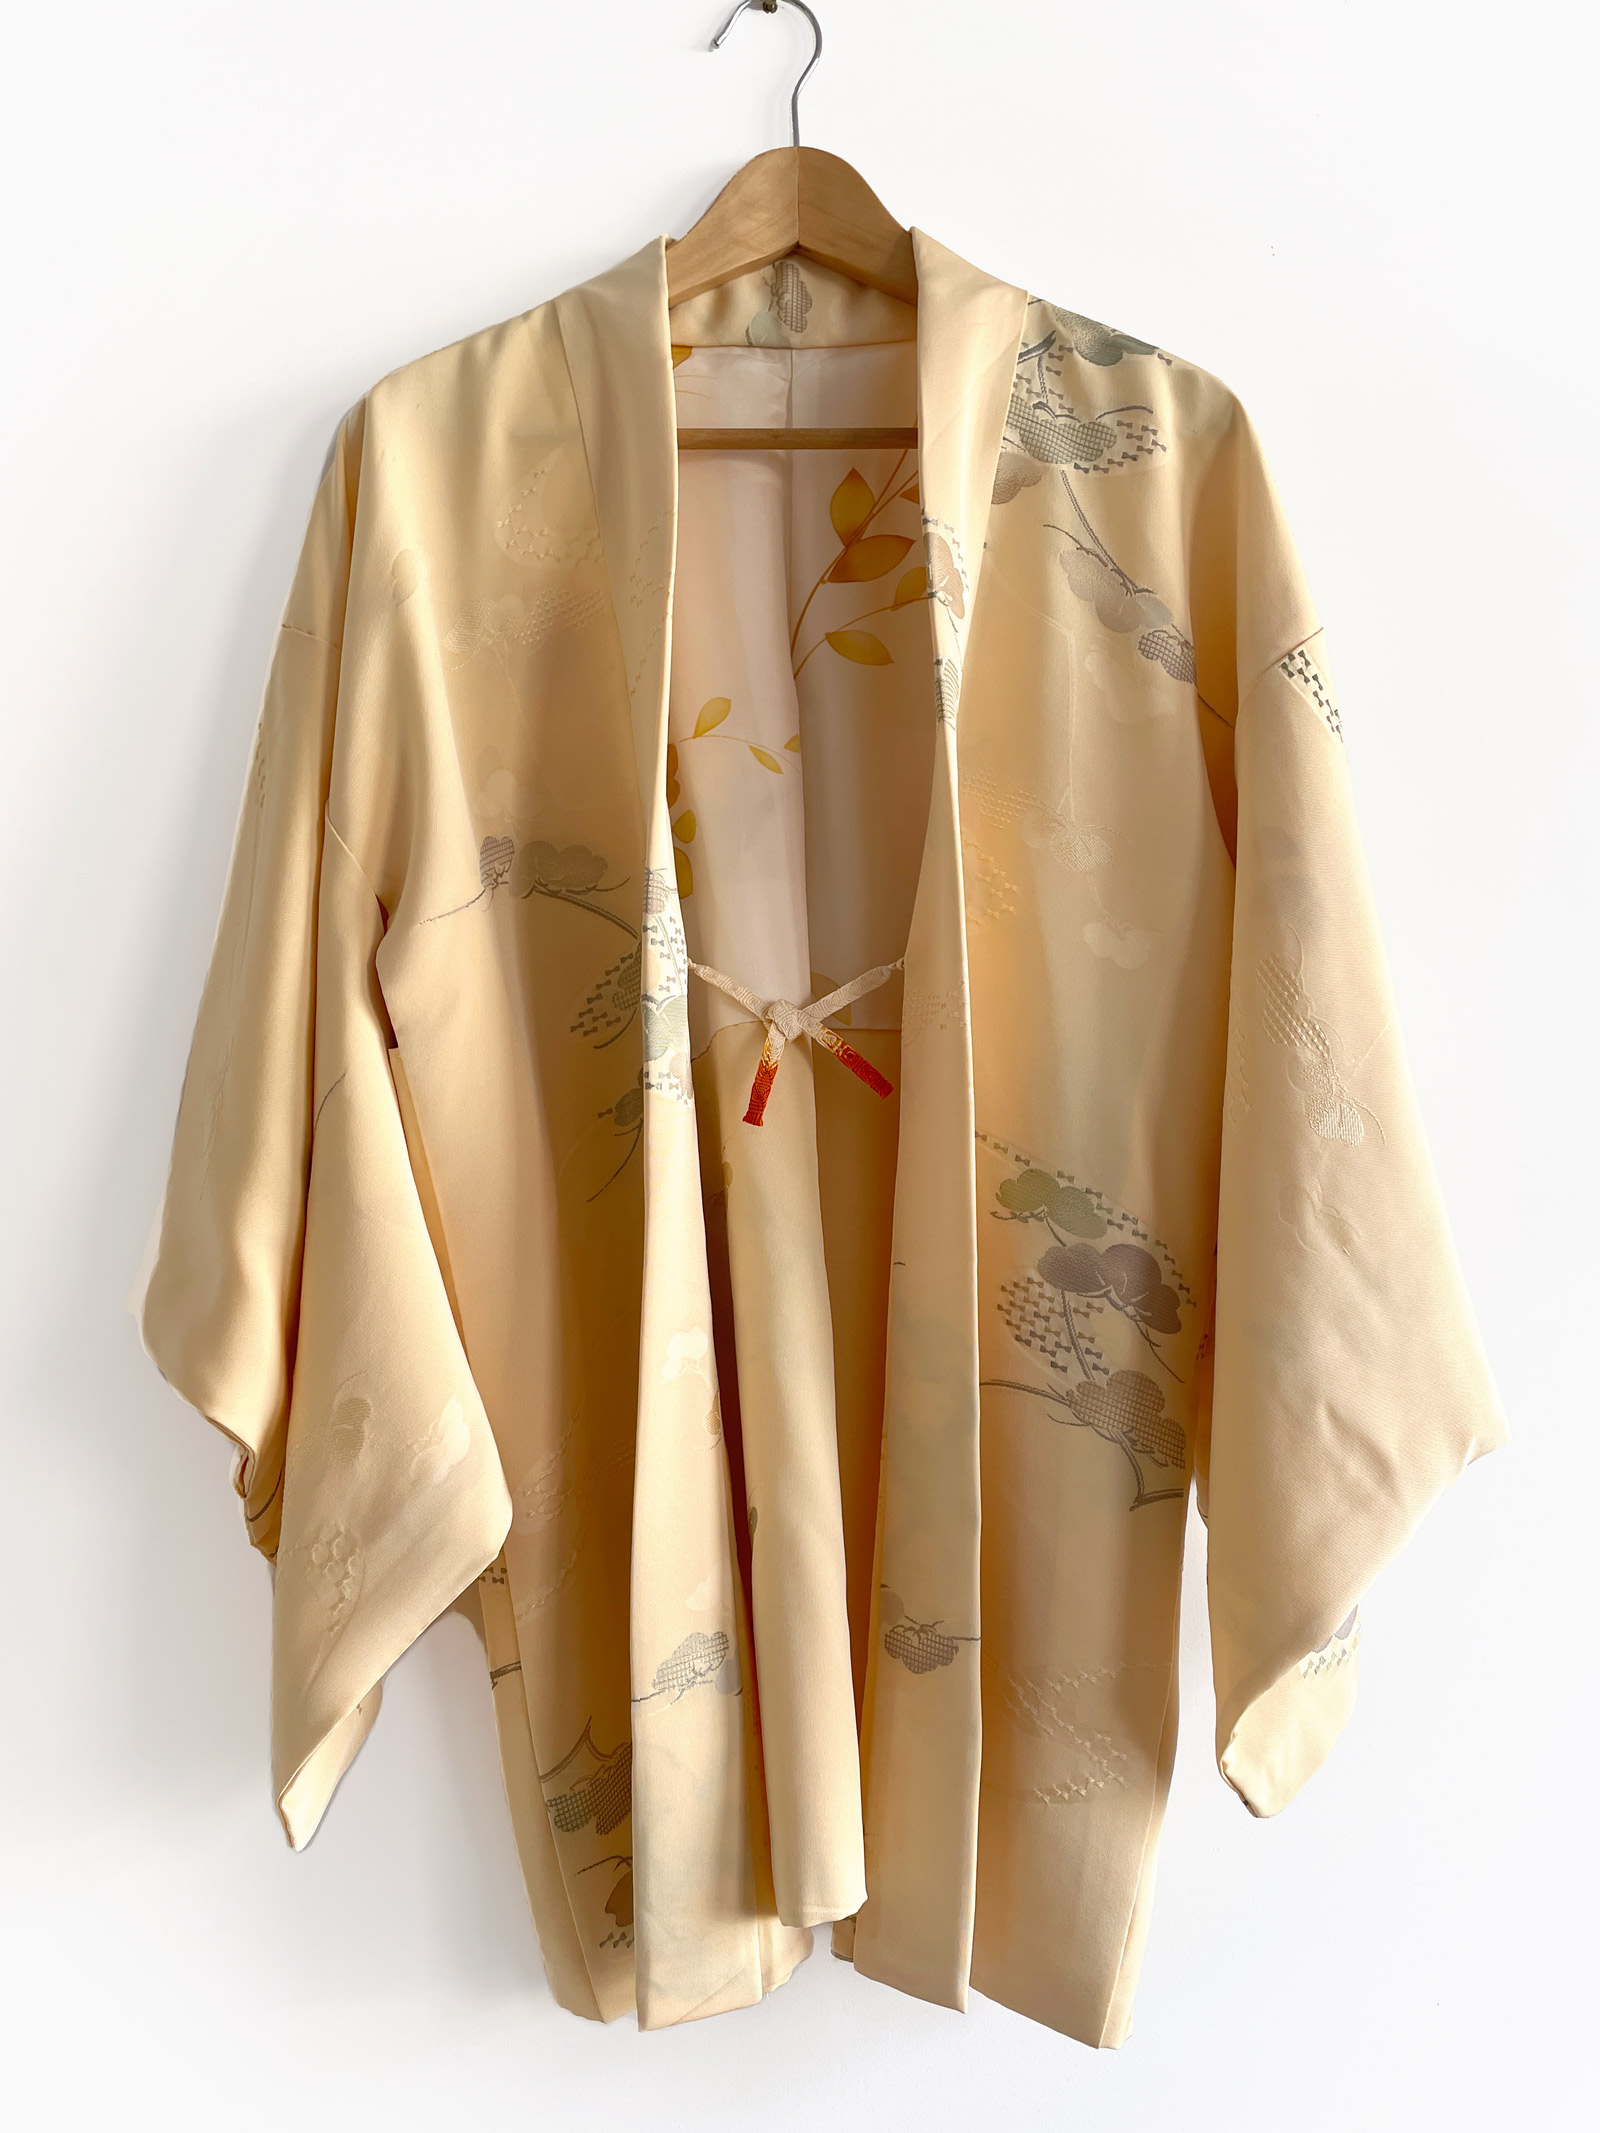 Shinju – silk Kimono jacket in a warm vanilla shade with magnificent details